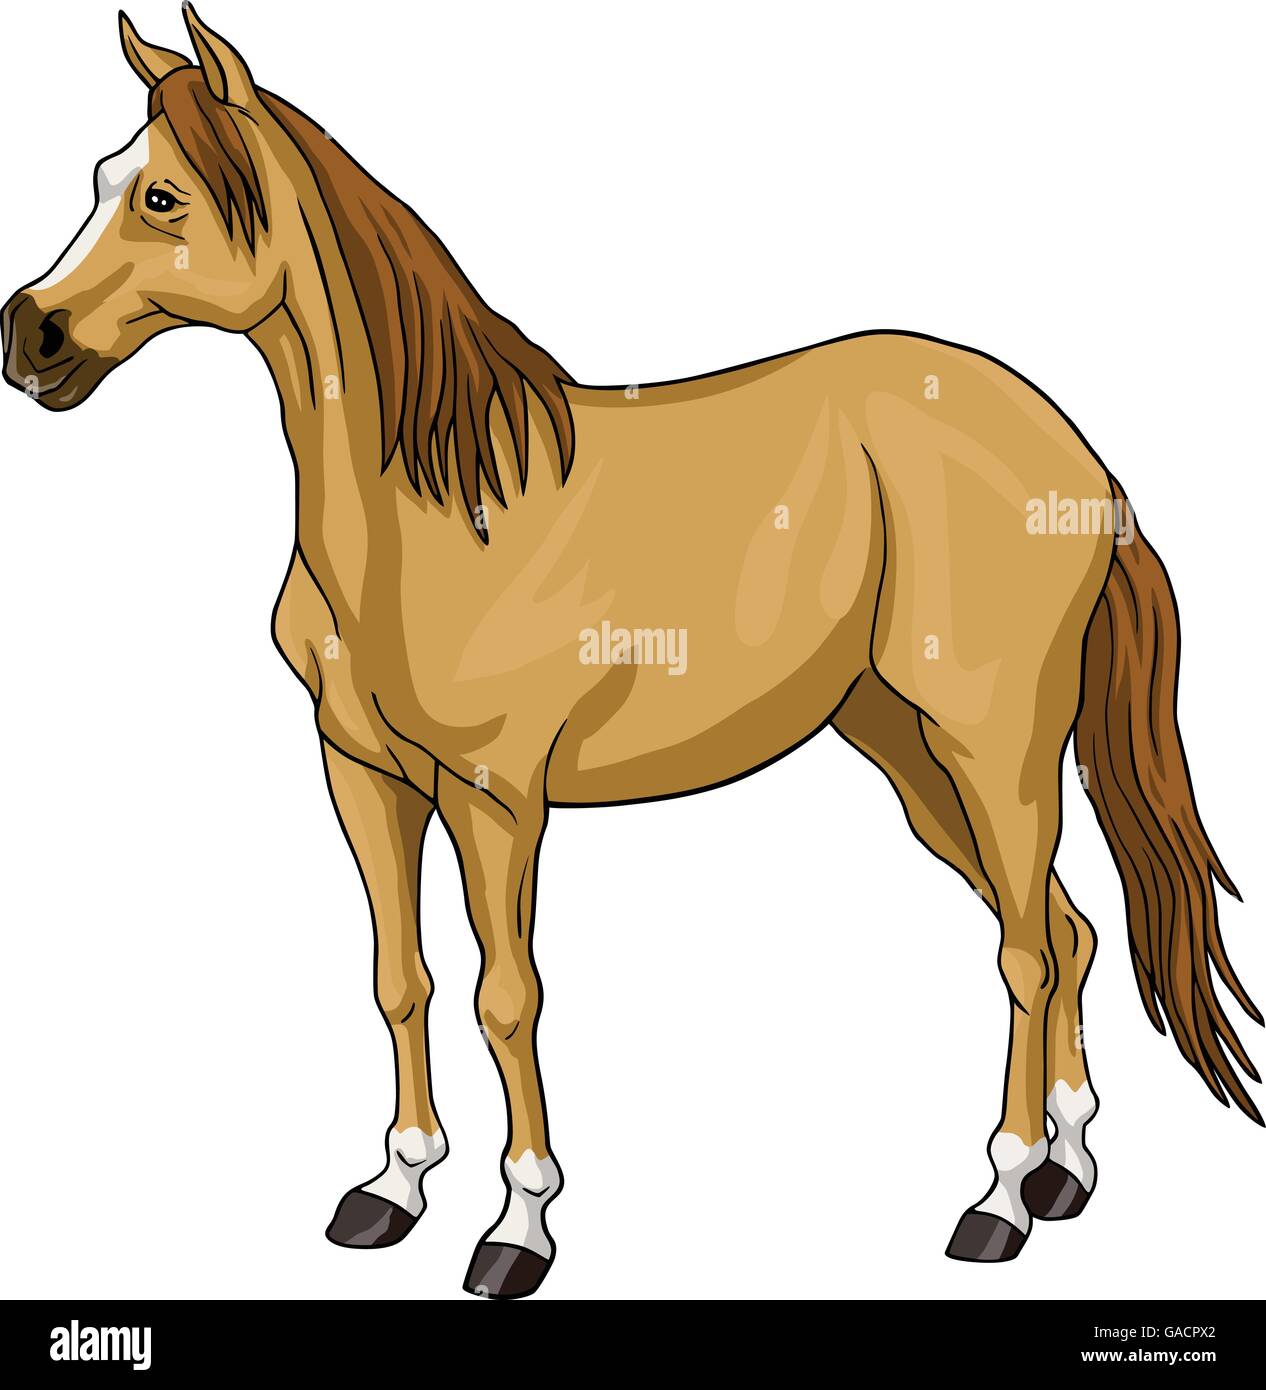 Braune Pferd weißen Kopf Illustration Stock Vektor